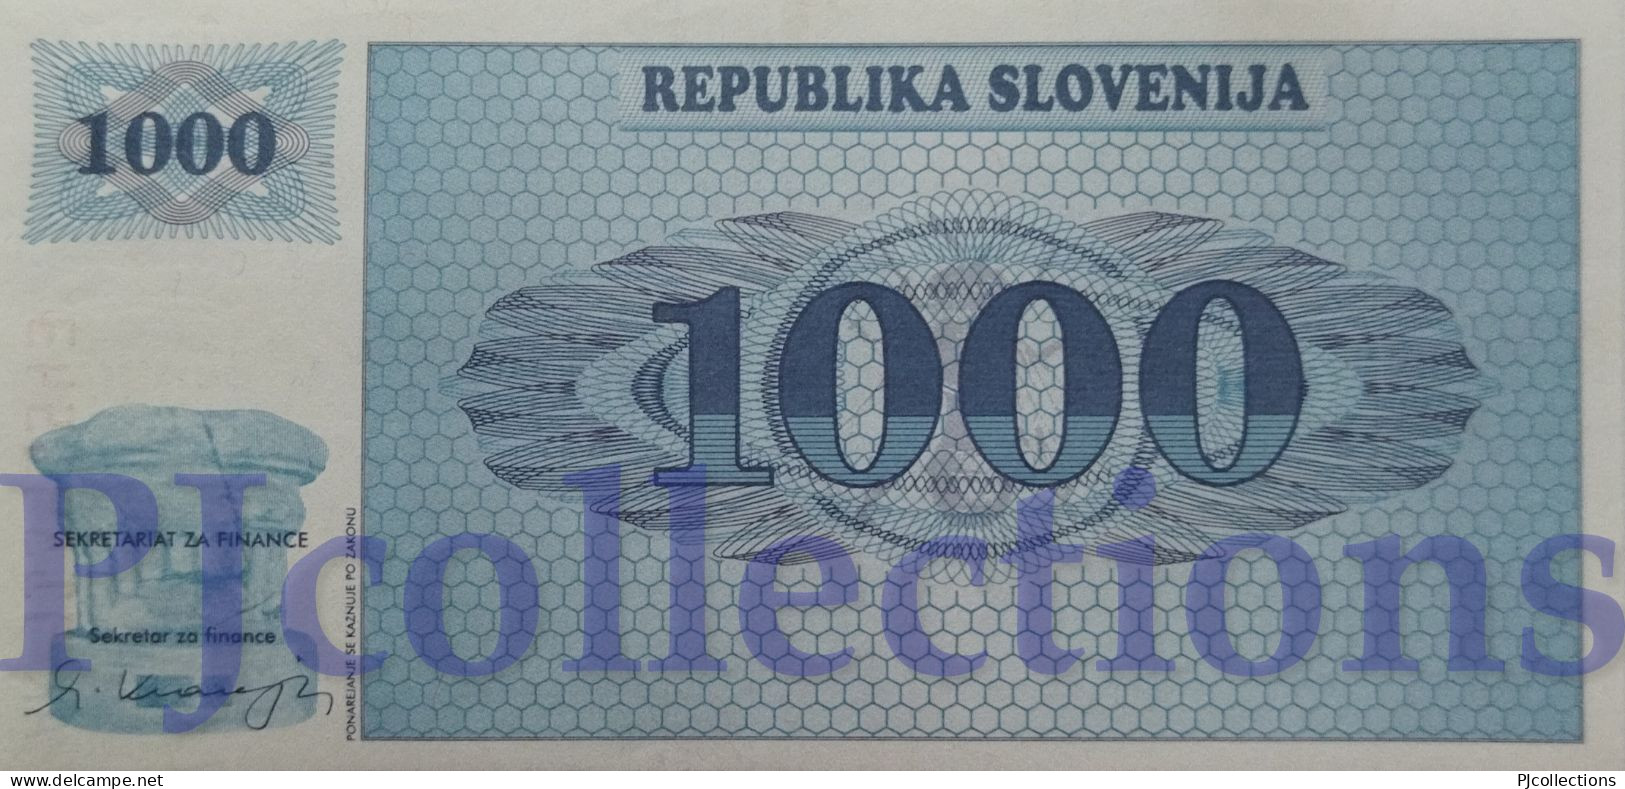 SLOVENIA 1000 TOLARJEV 1991 PICK 9a AU/UNC RARE - Eslovenia